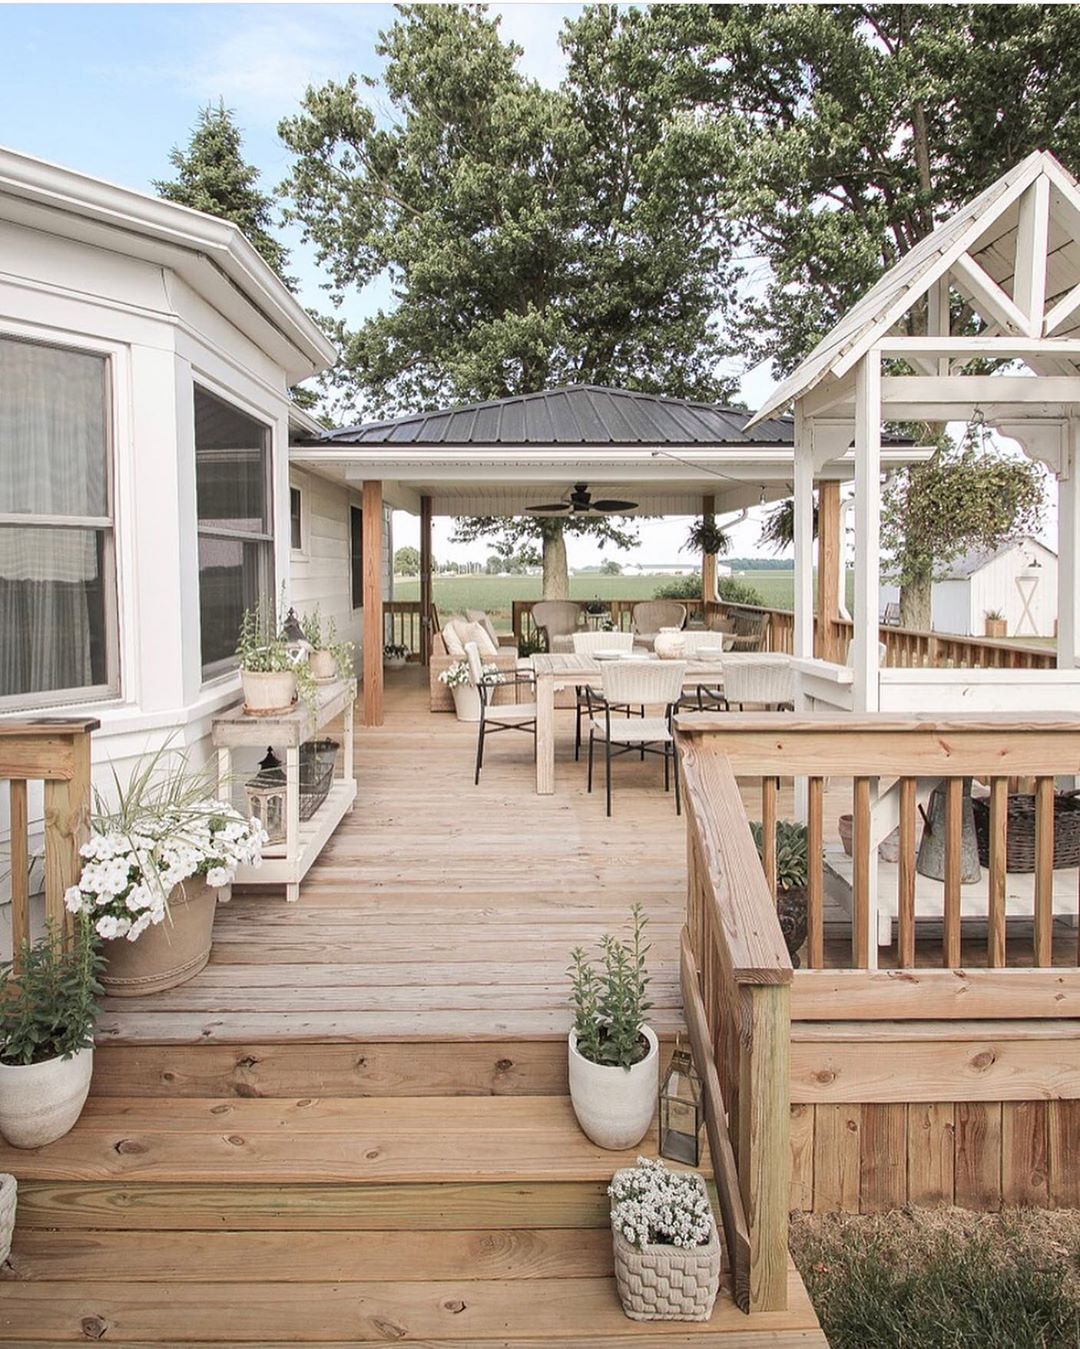 50+ Beautiful Backyard Patio Design Ideas to Enjoy The Great Outdoors - PinMomStuff